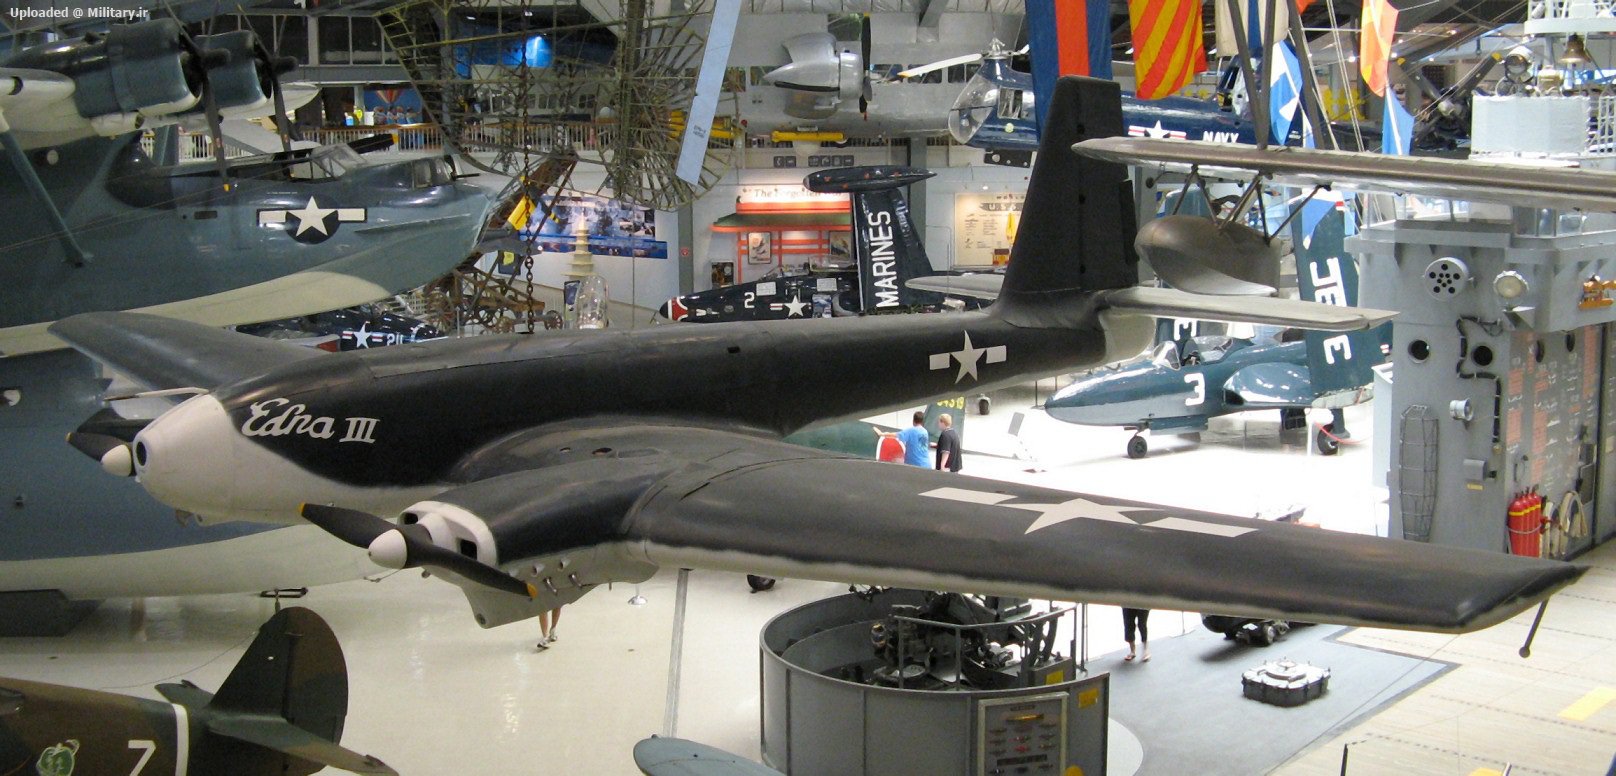 Interstate_TDR-1_on_display_at_Naval_Aviation_Museum.jpg